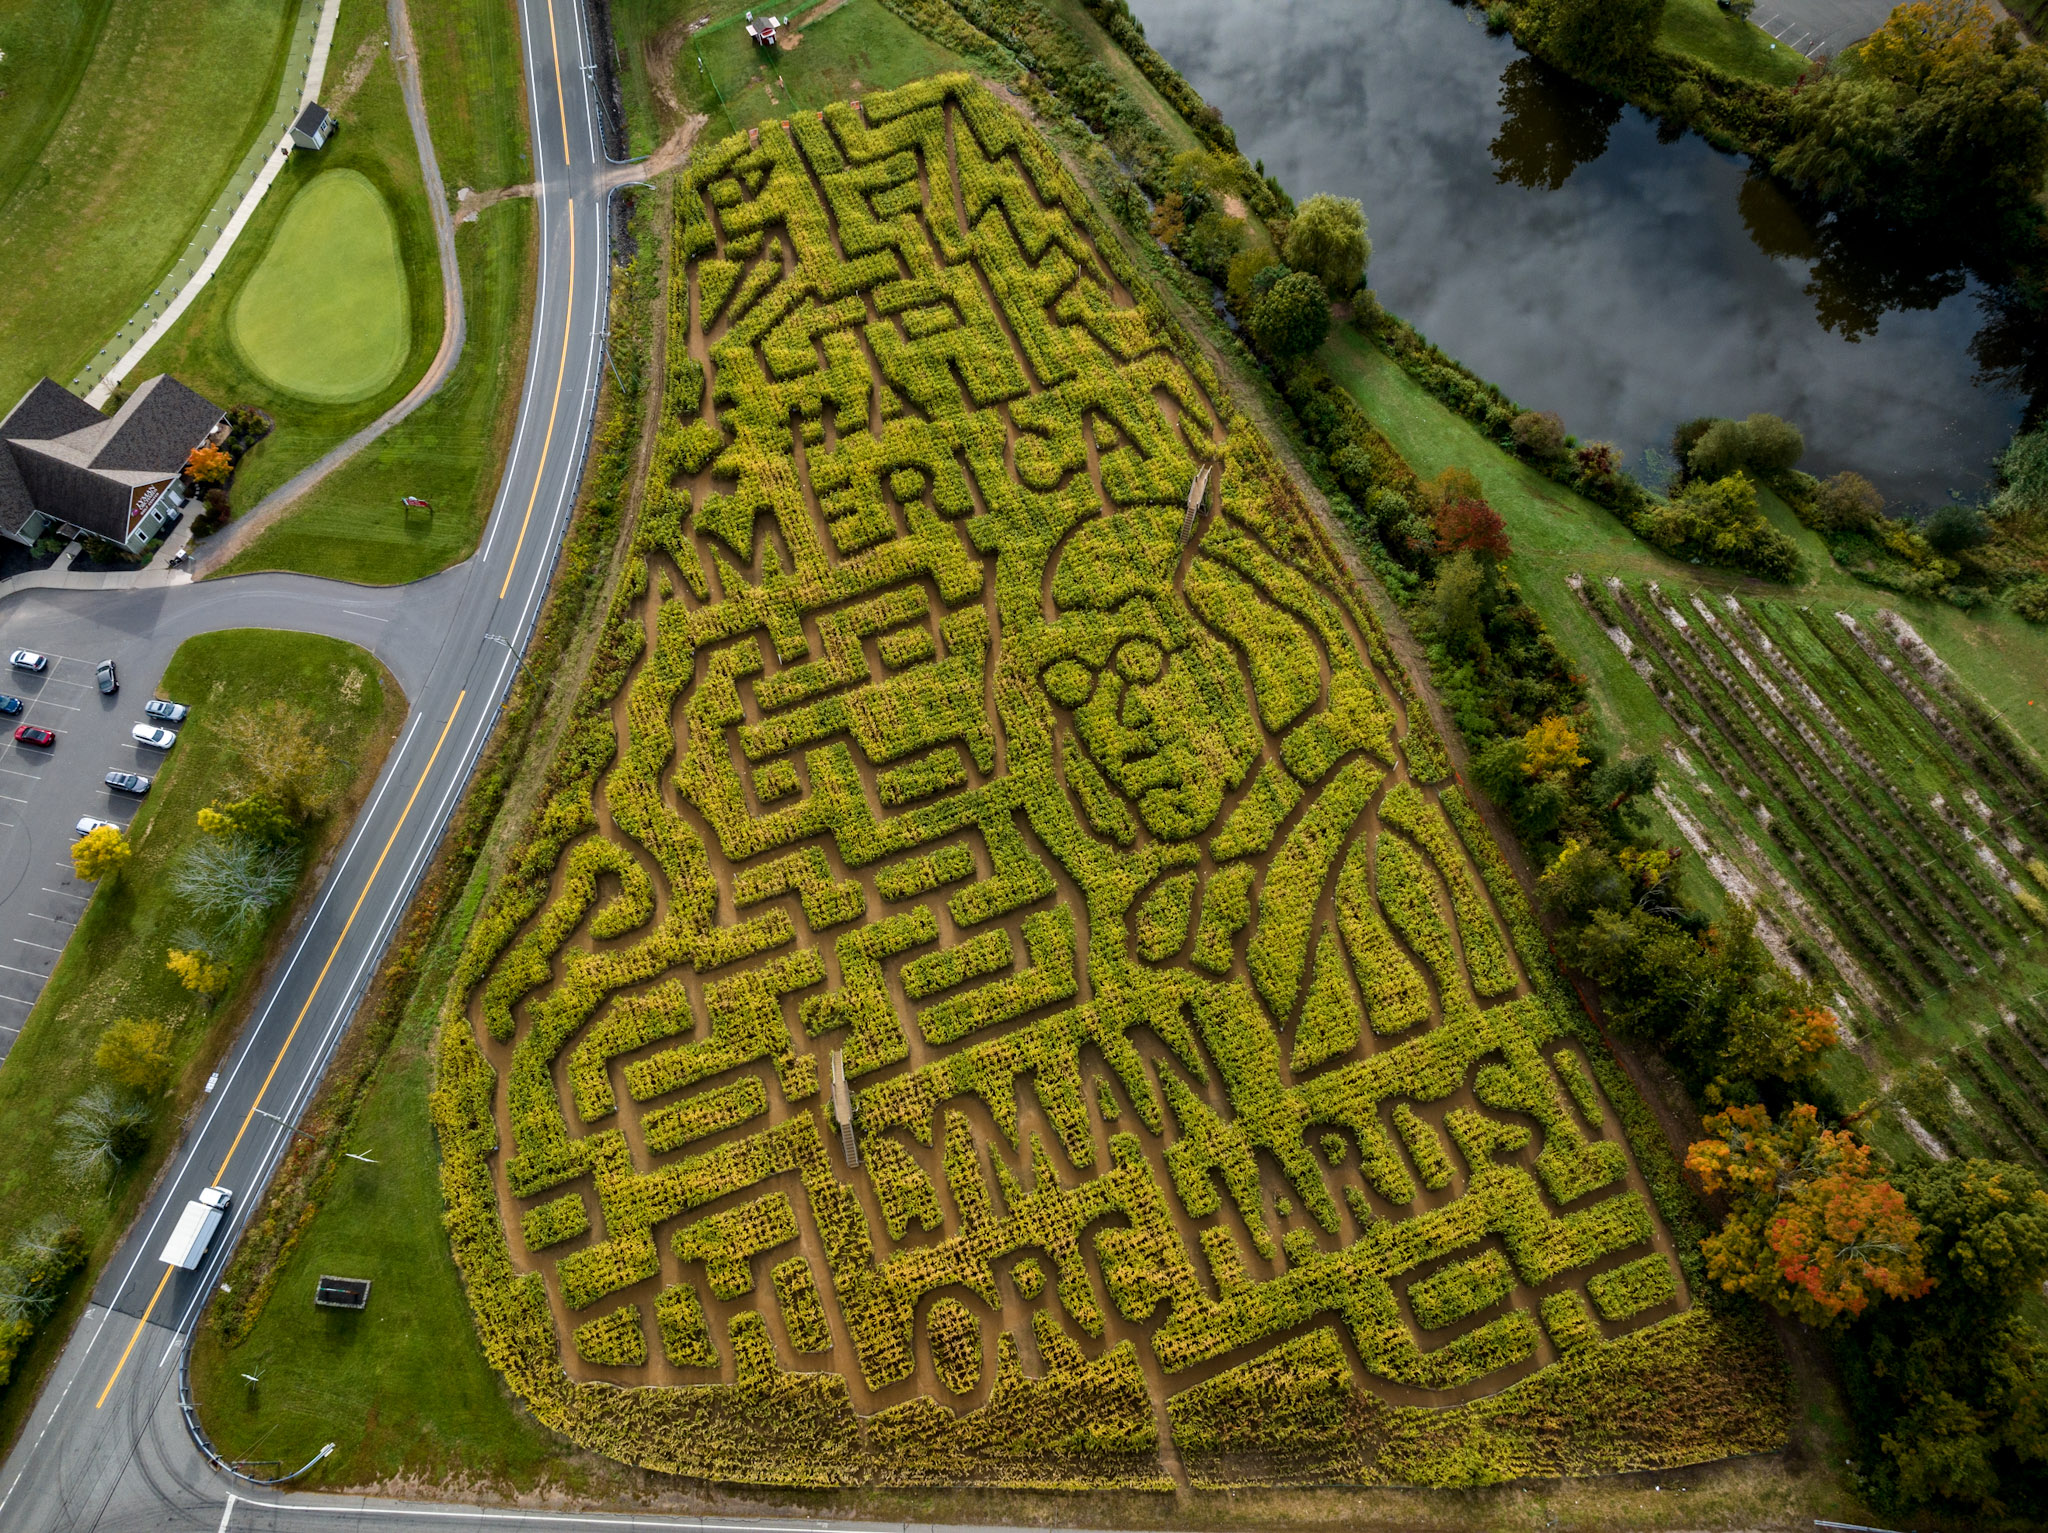 CT corn maze: Making a Ben Franklin maze at Lyman Orchards